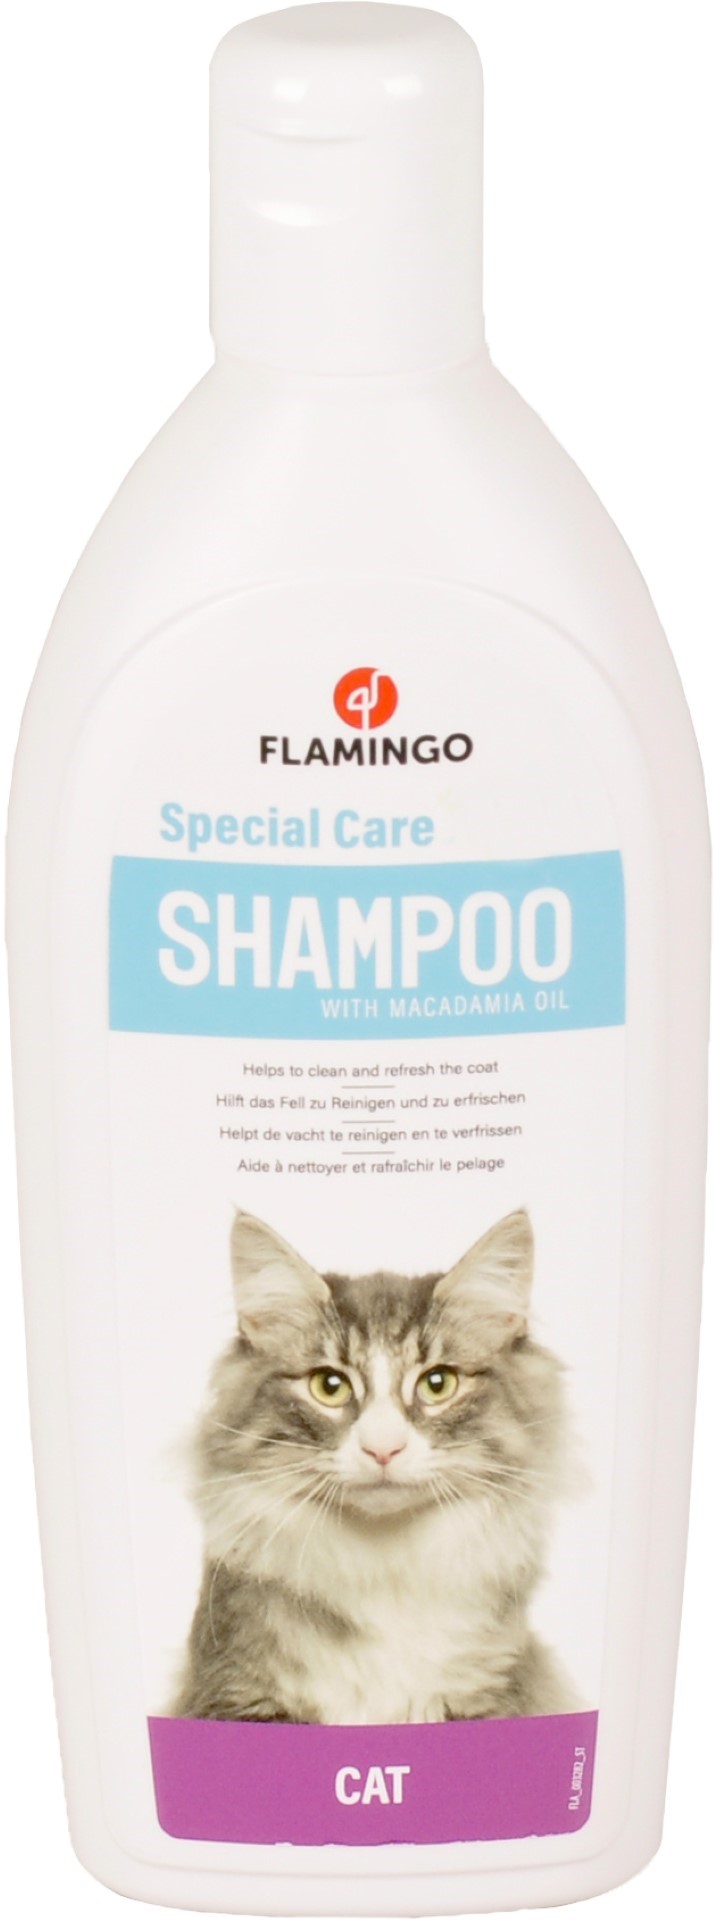 Shampoo care kat - 300 ml Flamingo